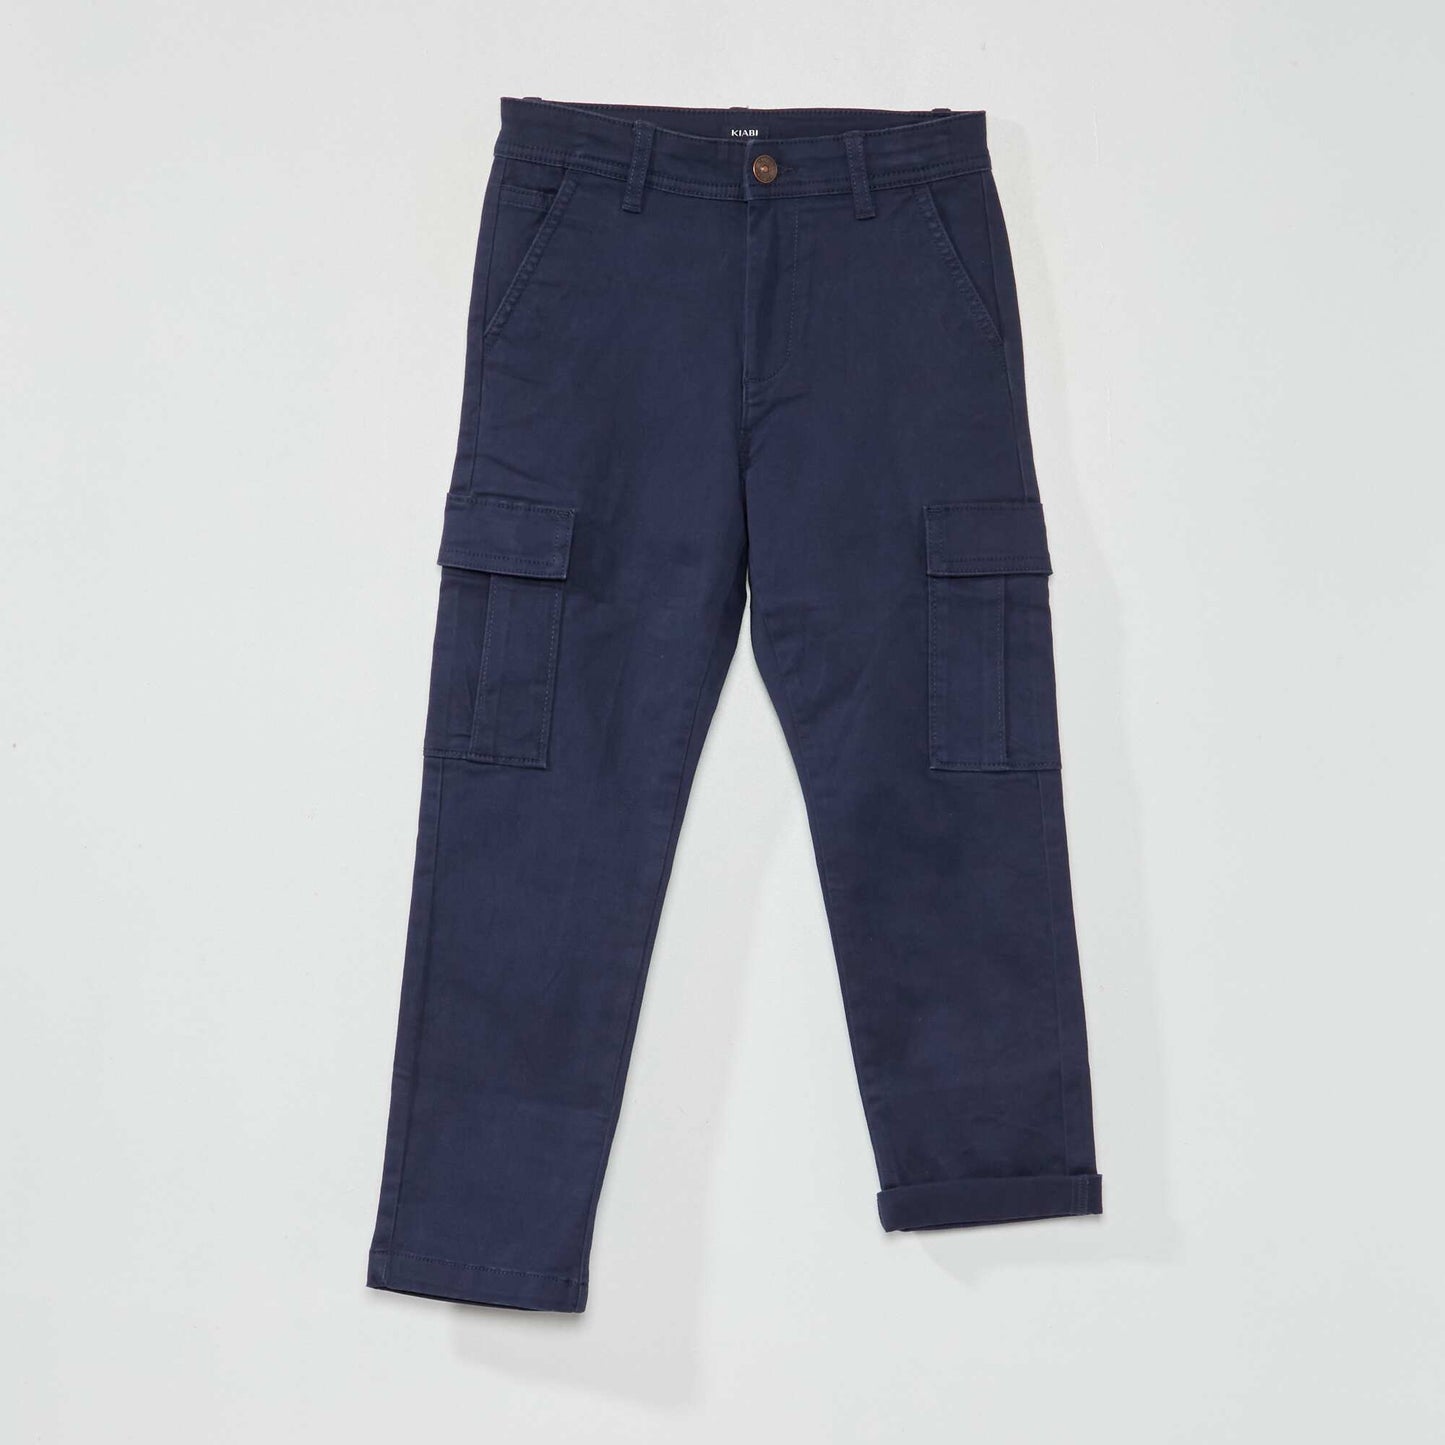 Multi-pocket trousers Blue dark